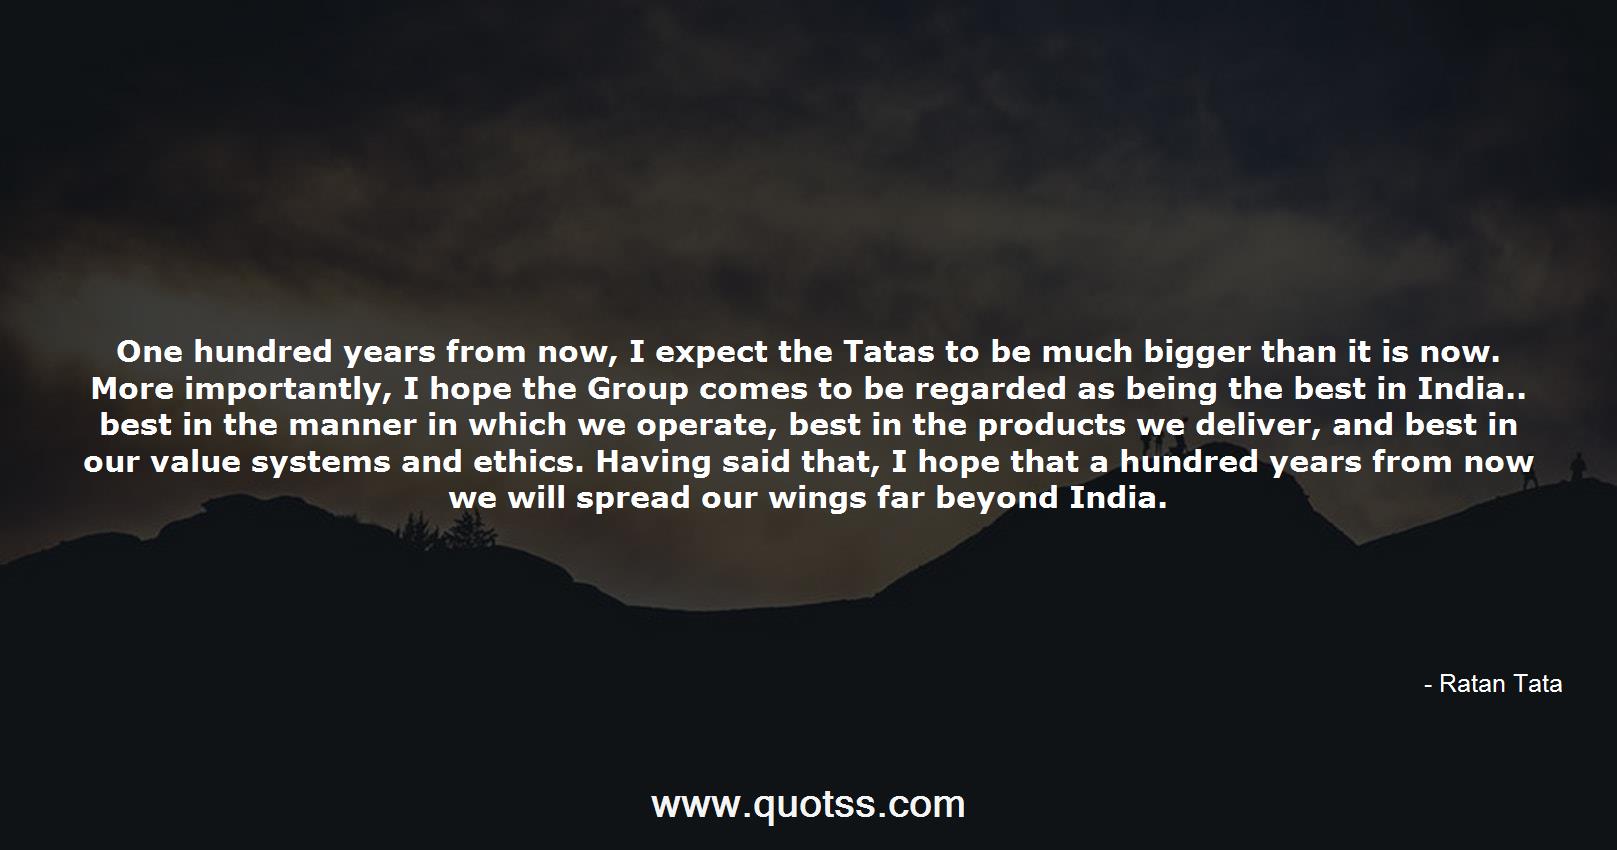 Ratan Tata Quote on Quotss